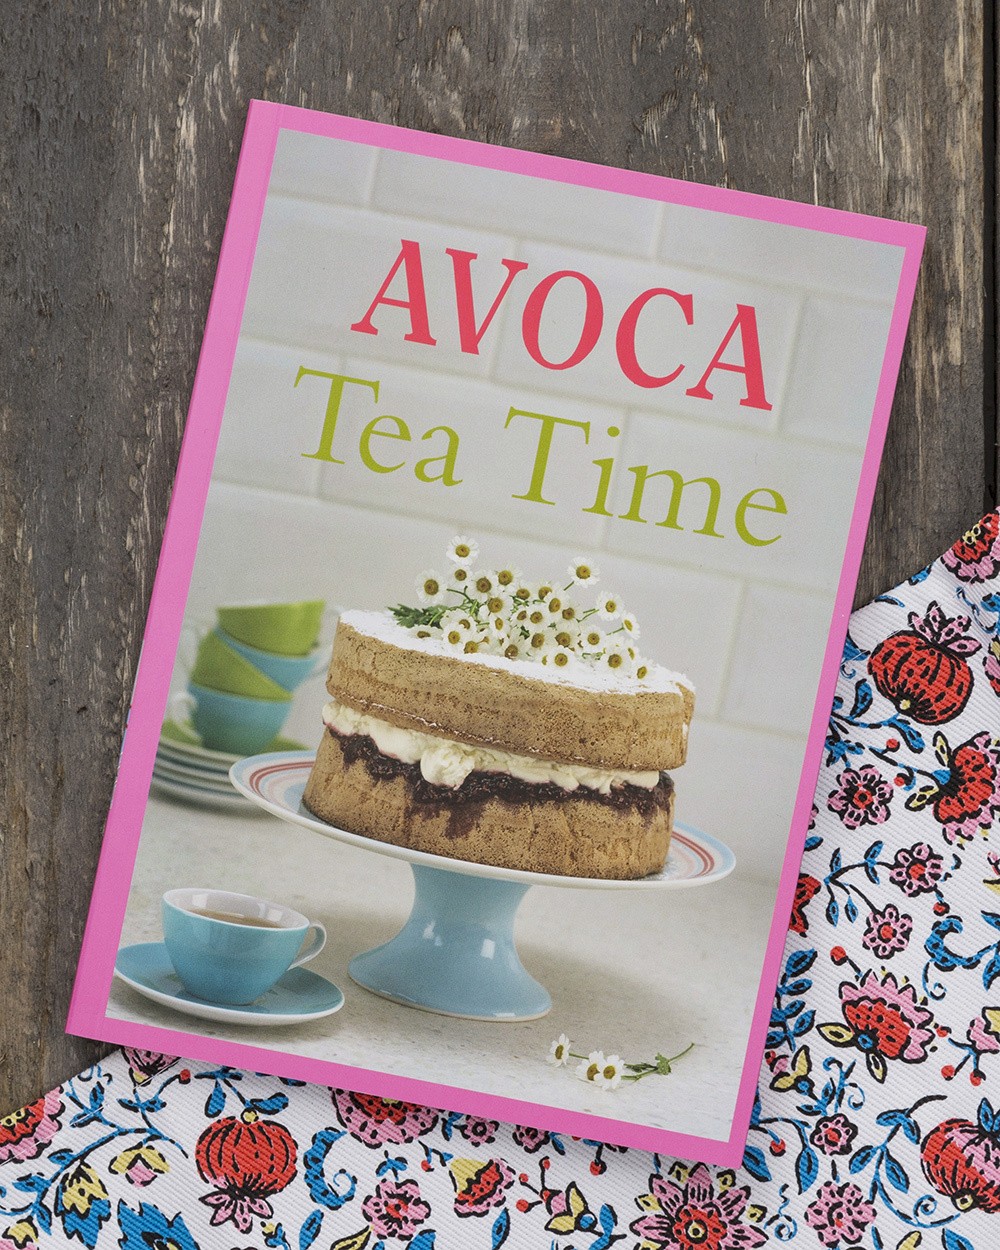 Avoca Tea Time, Compact Edition